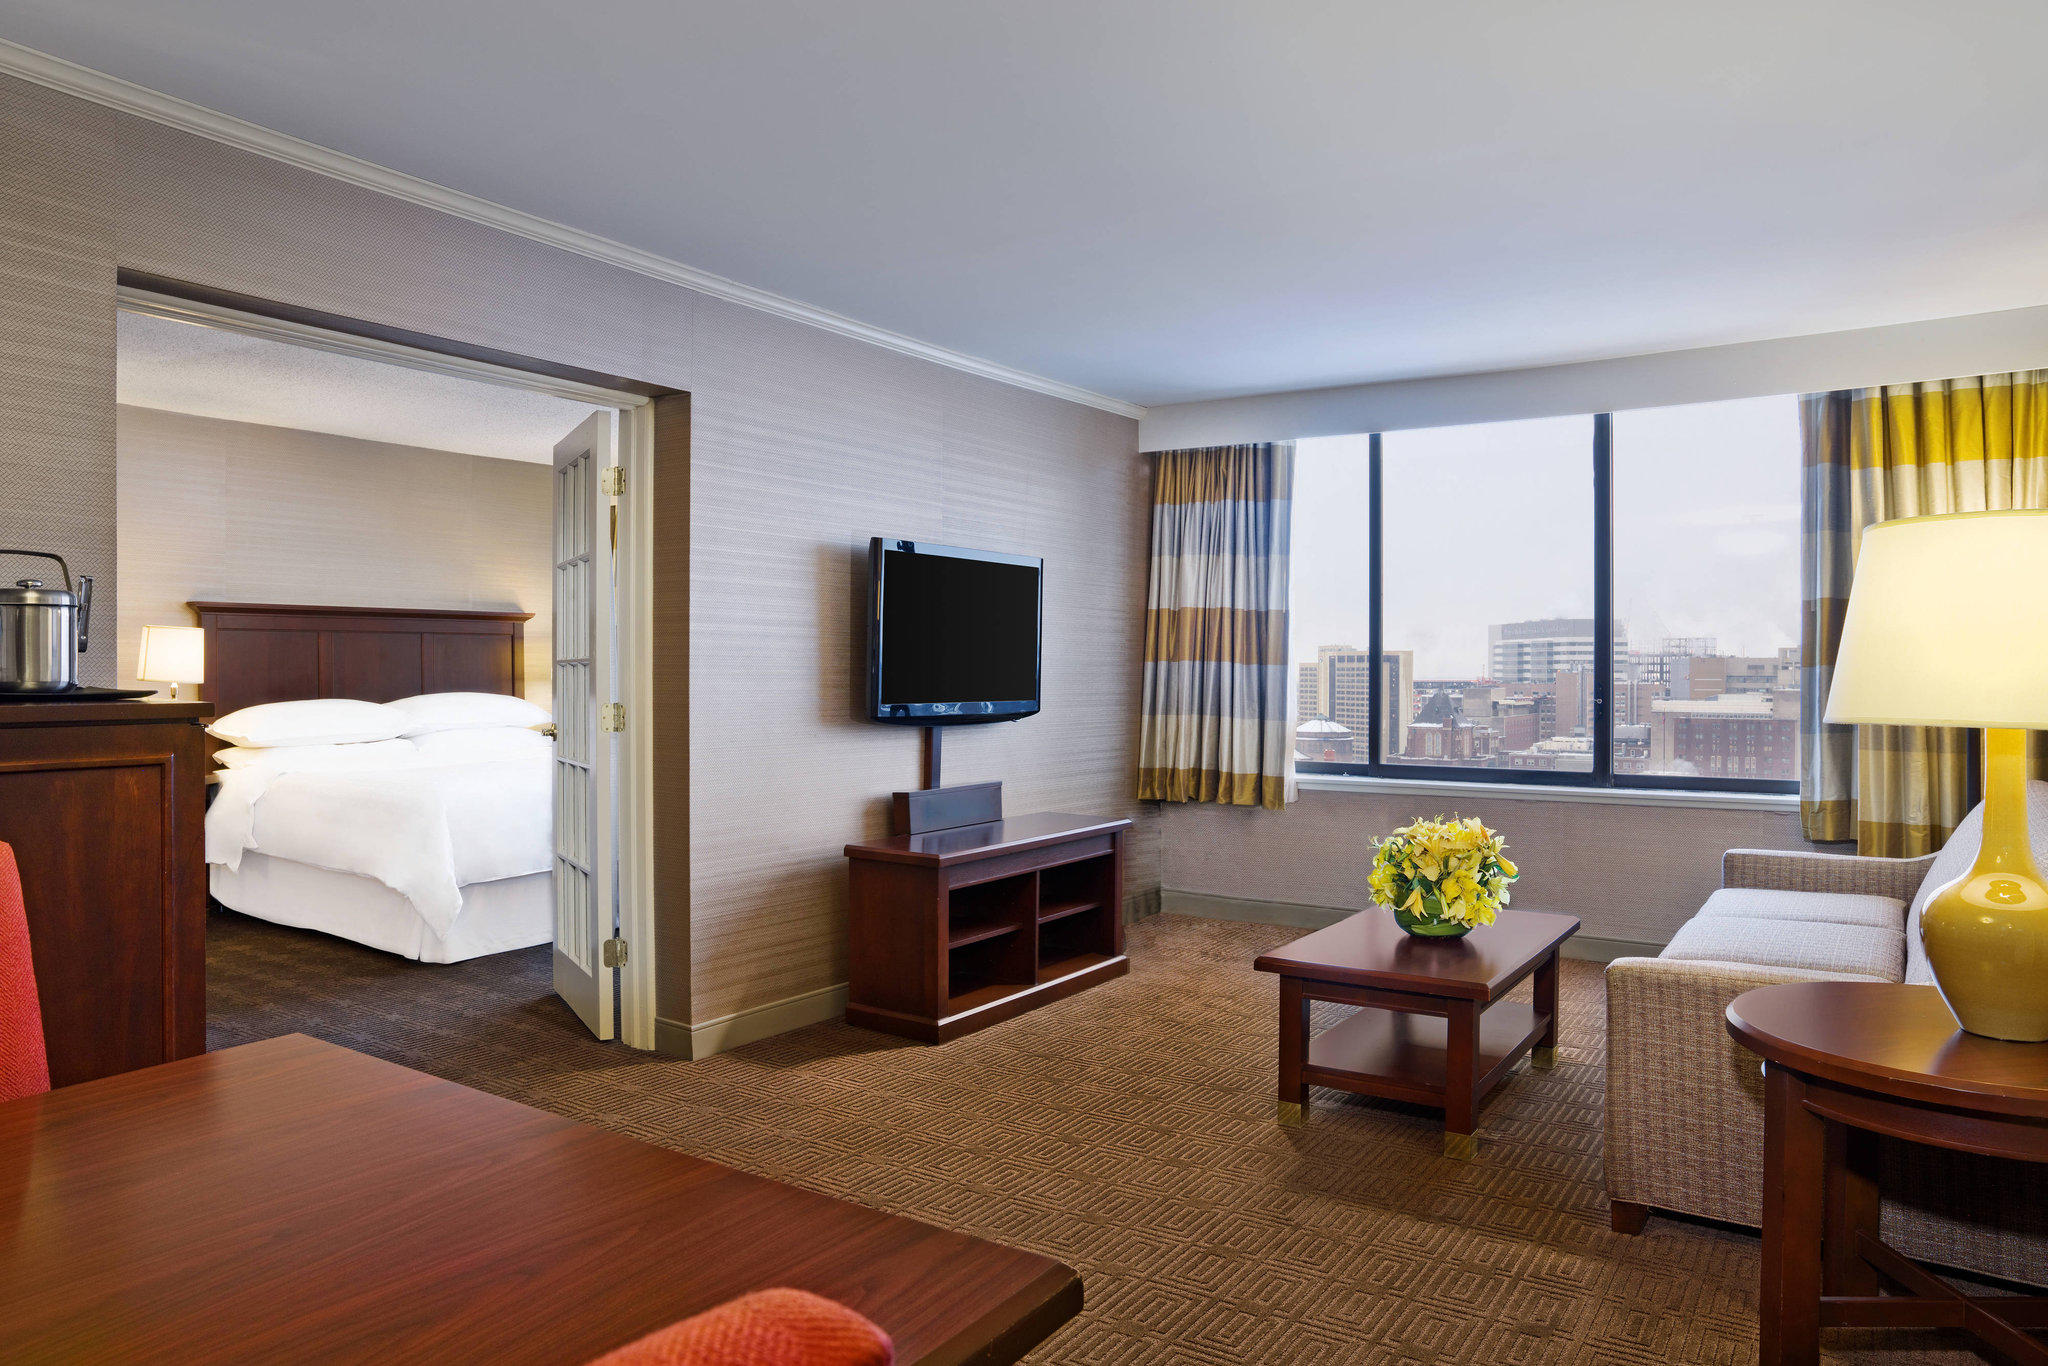 Sheraton Philadelphia University City Hotel Photo